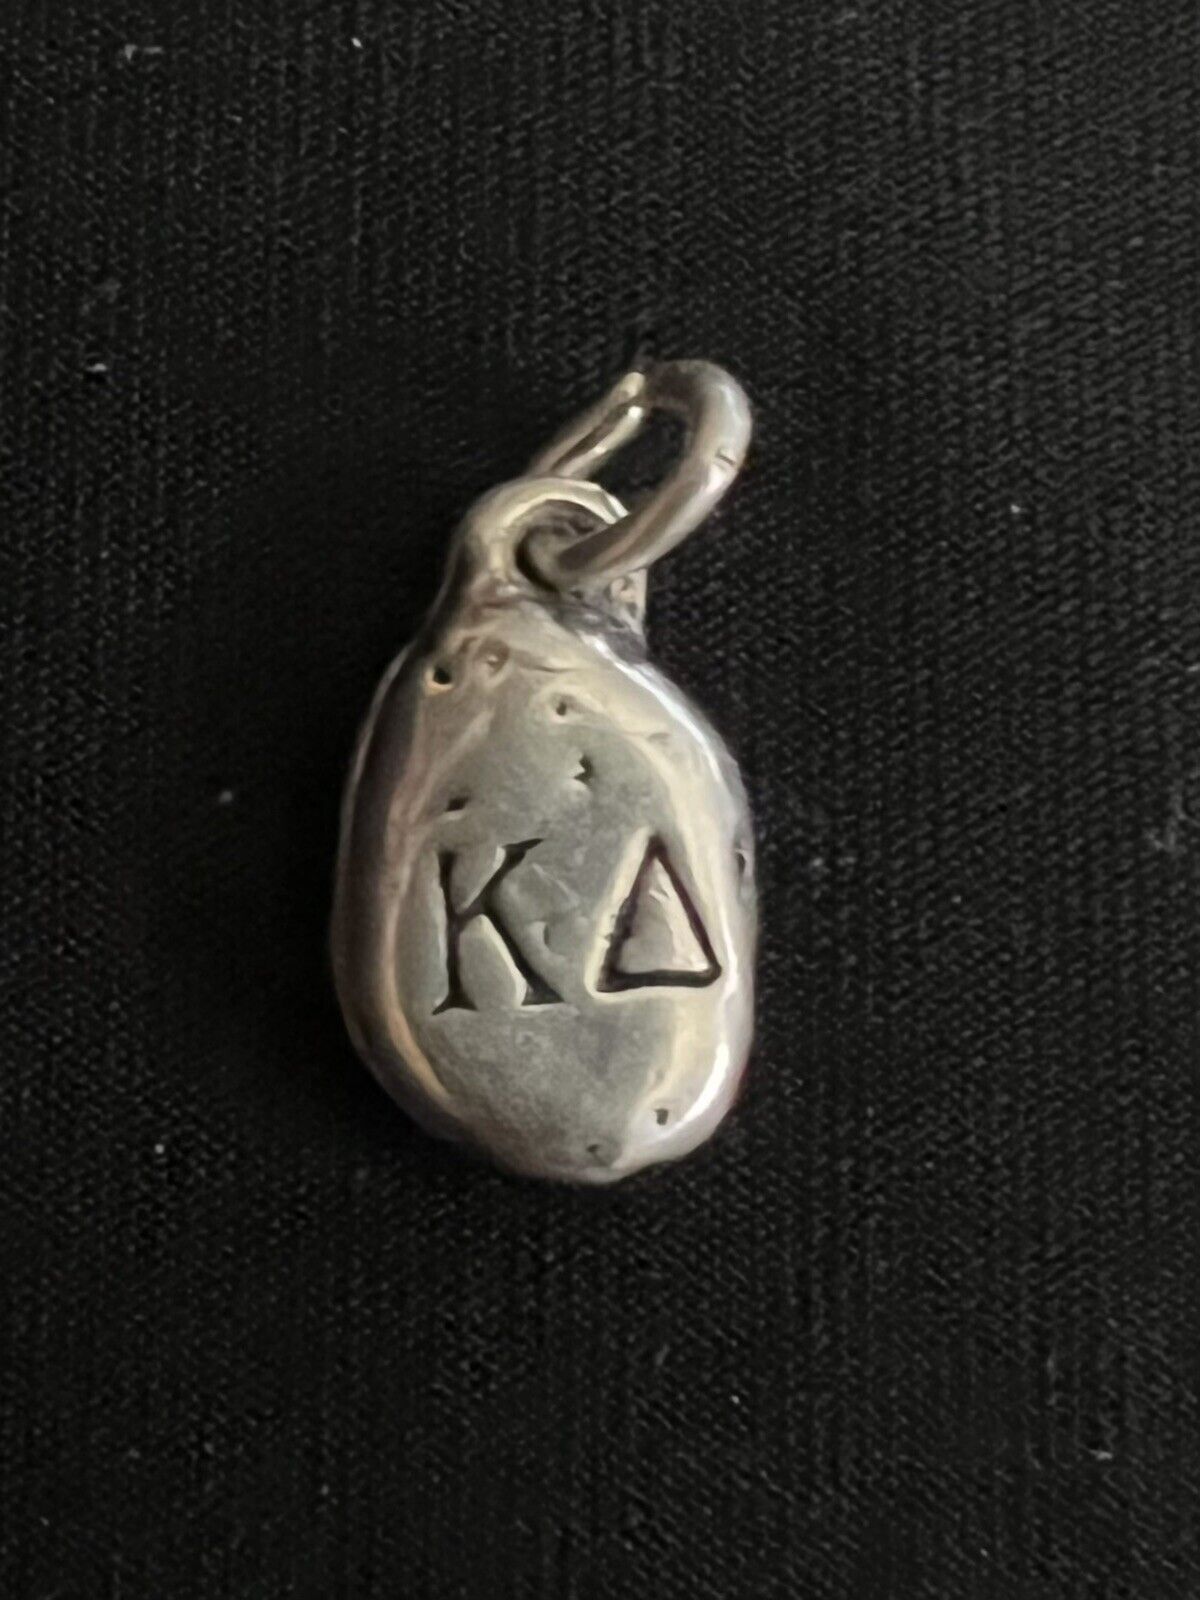 Tiny Vintage Kappa Delta Sterling Silver Charm / Pendant 925